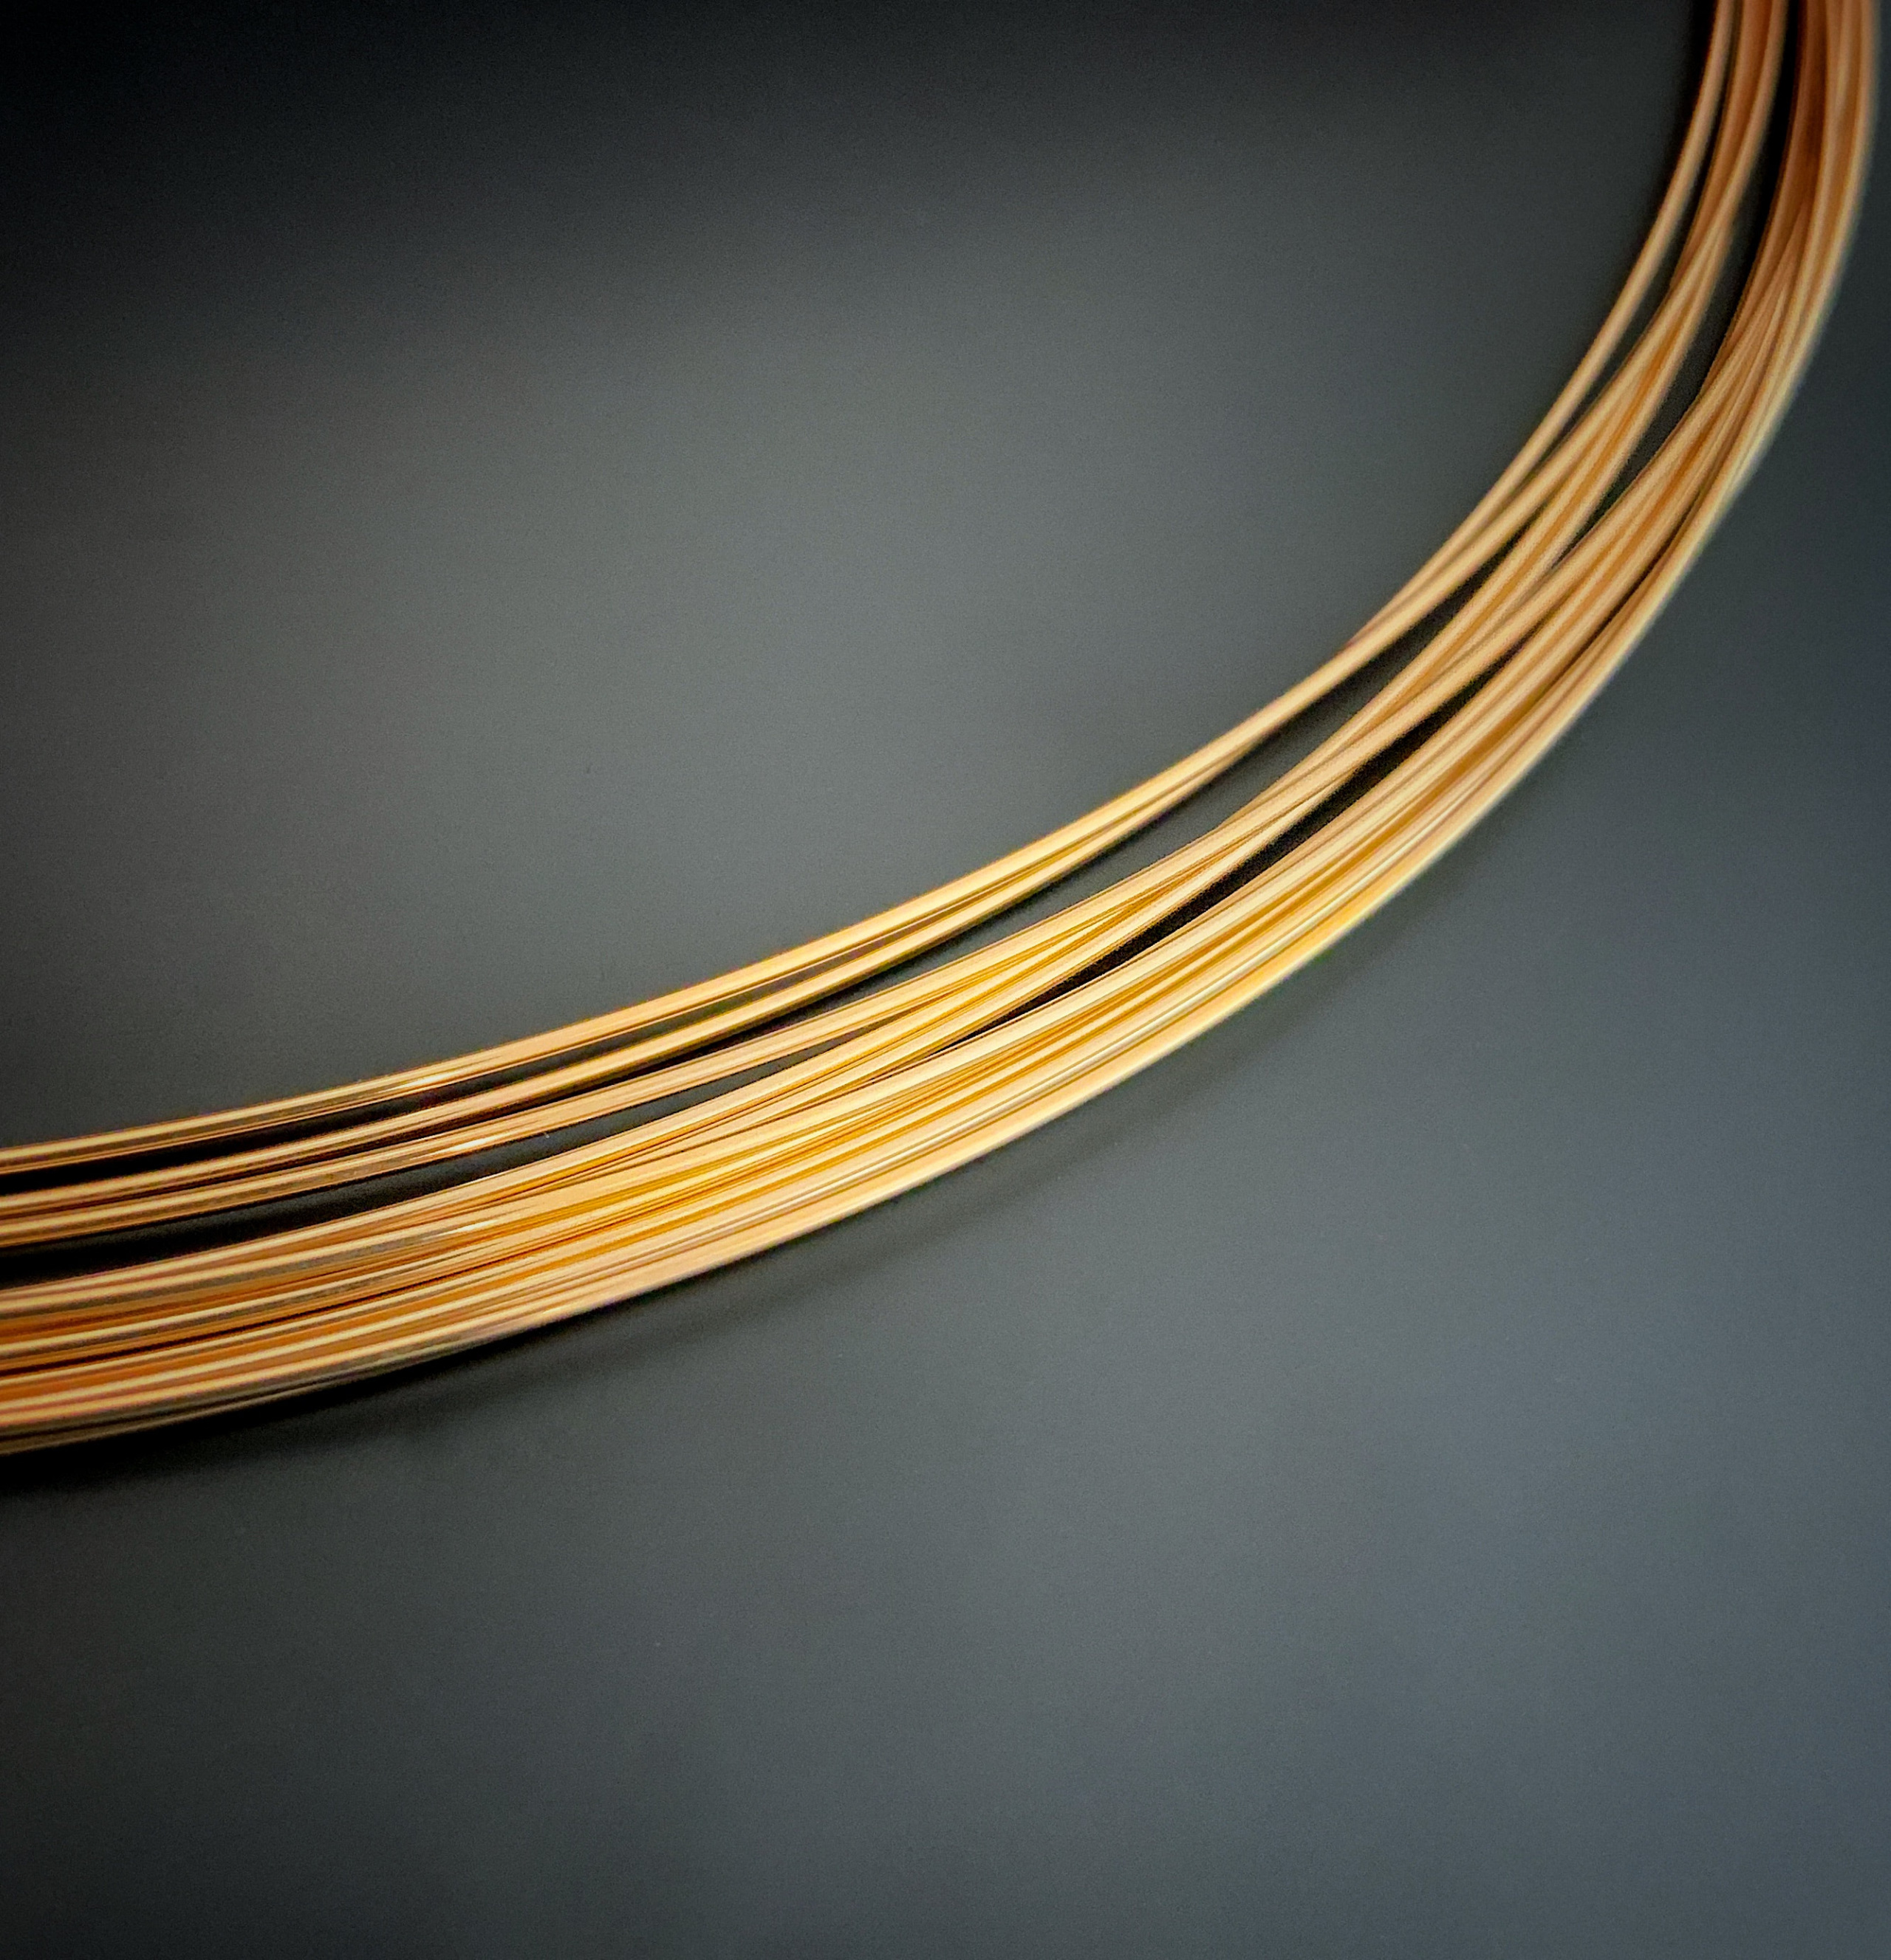 14k Gold Wire 20 feet (609 cm) 32 Gauge Jewelry Making Cord Thread